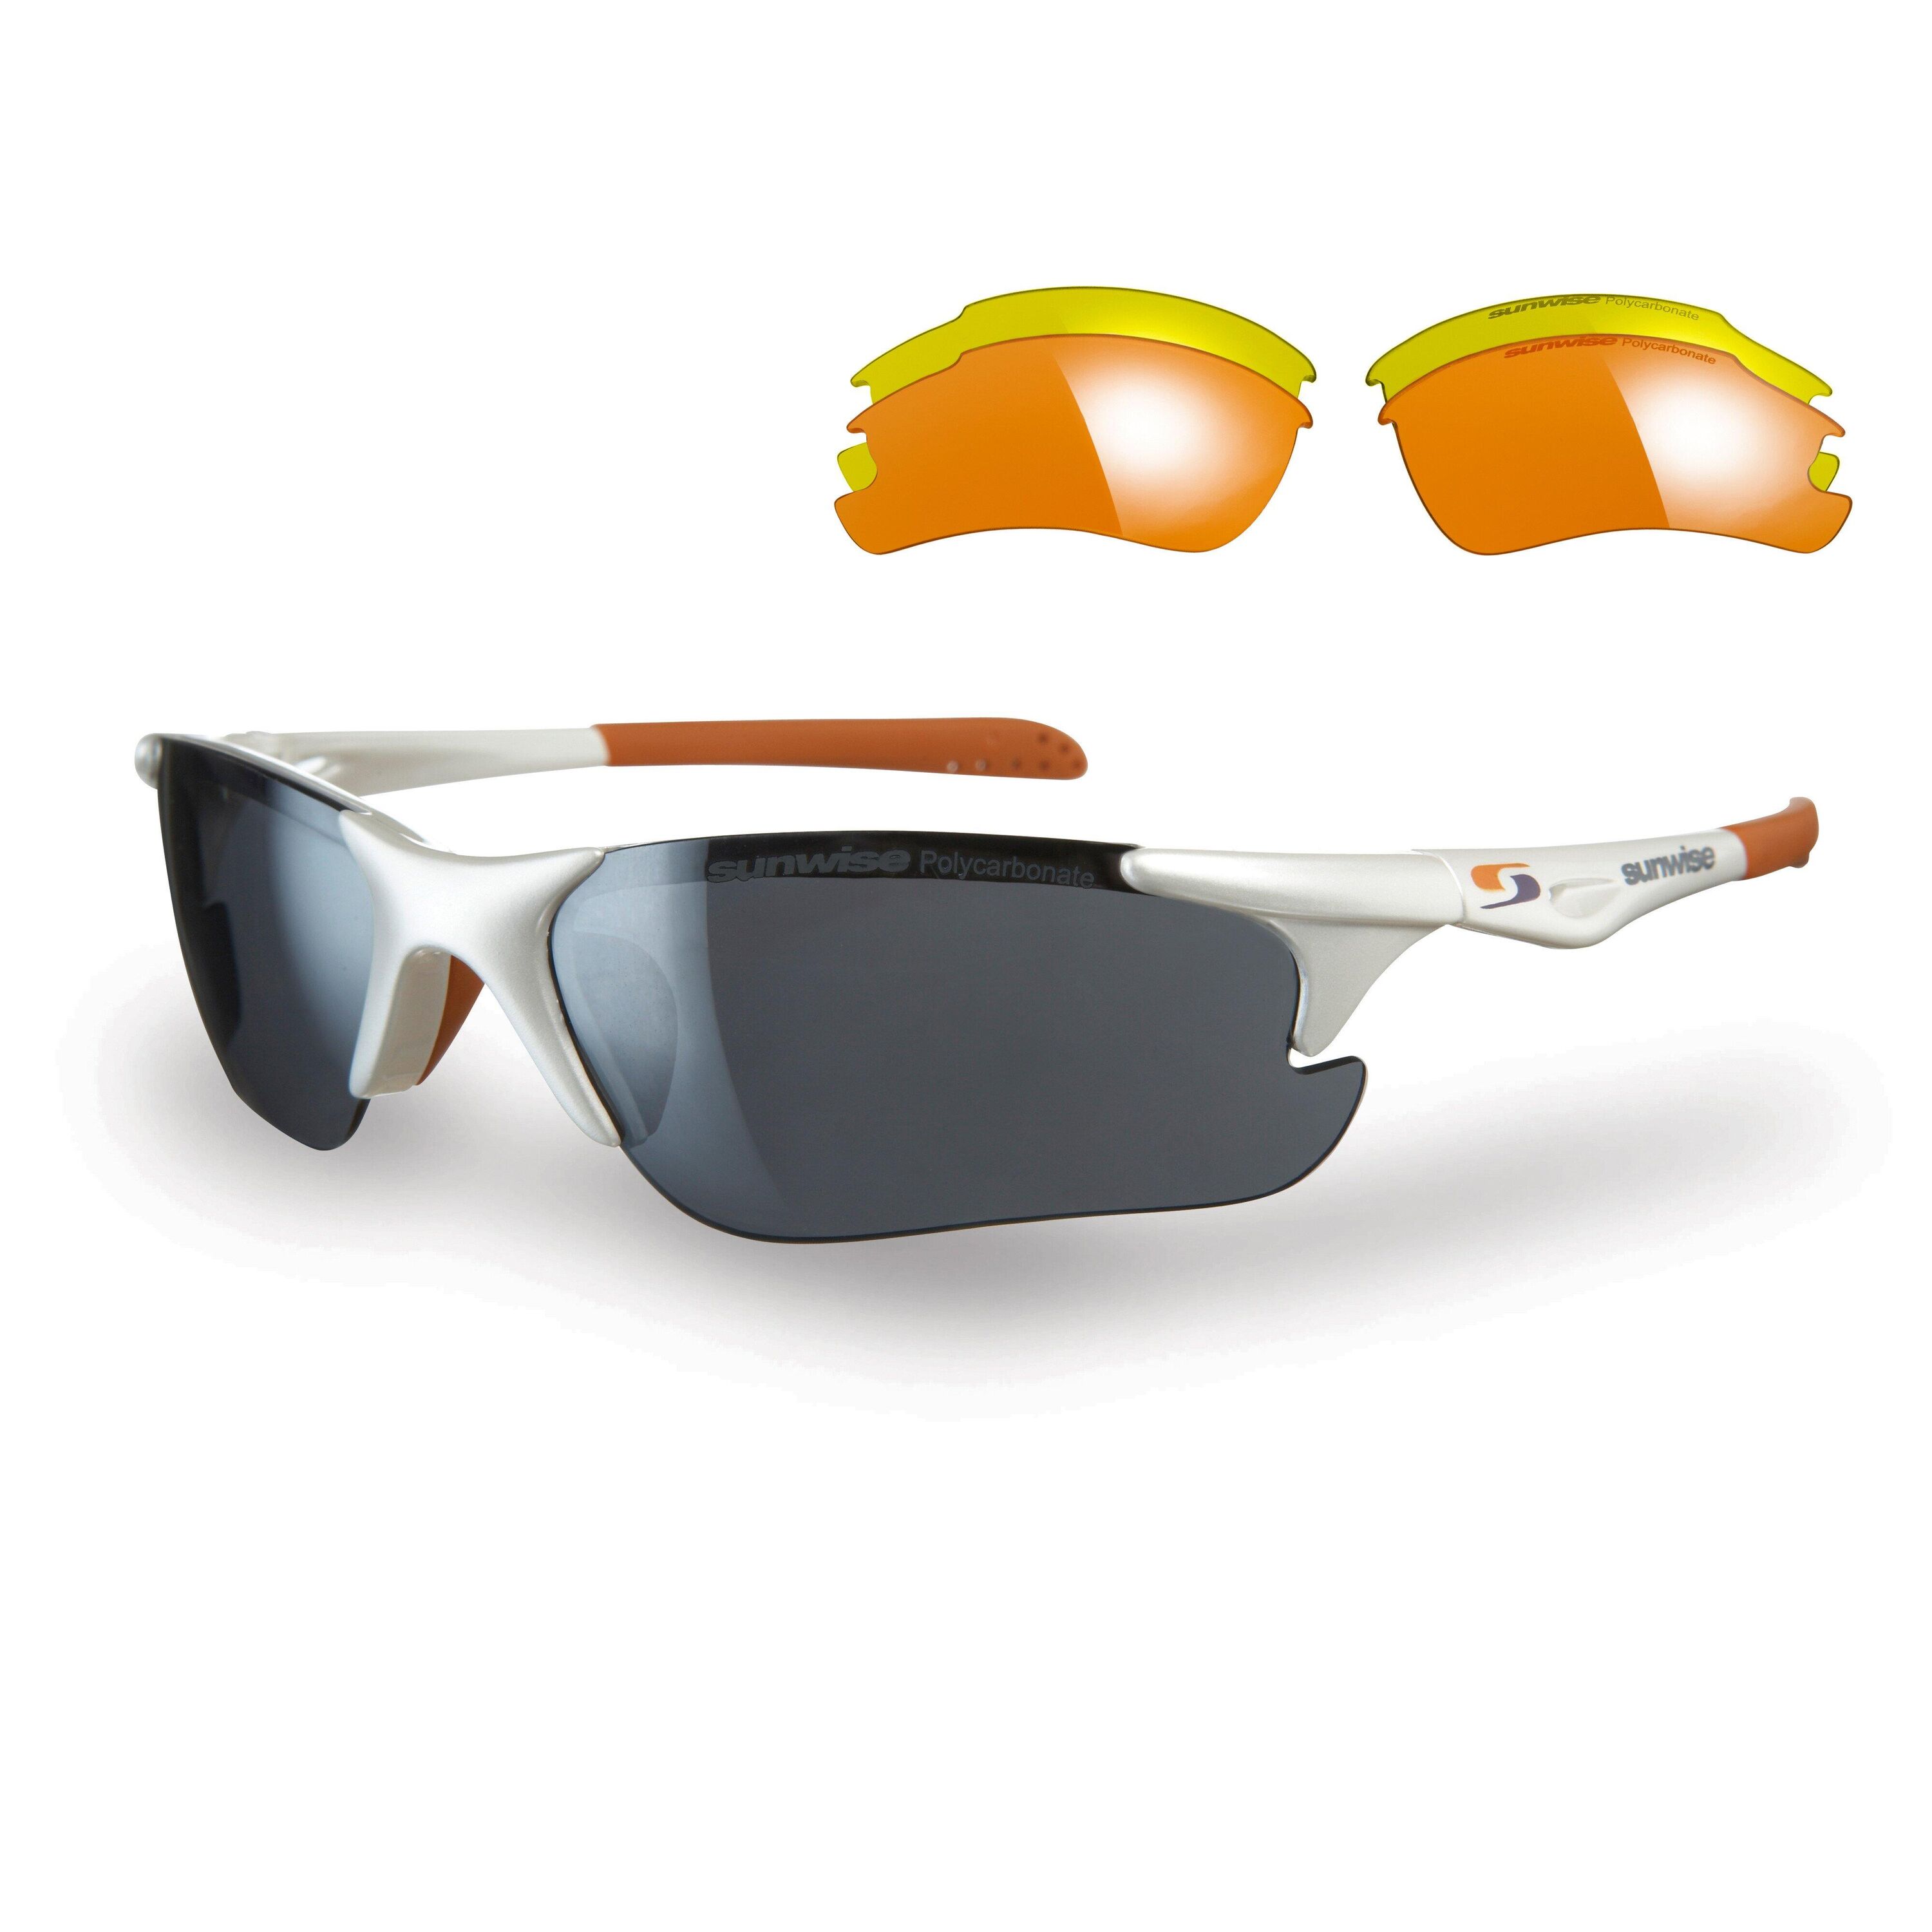 SUNWISE Twister Sports Sunglasses - Category 1-3